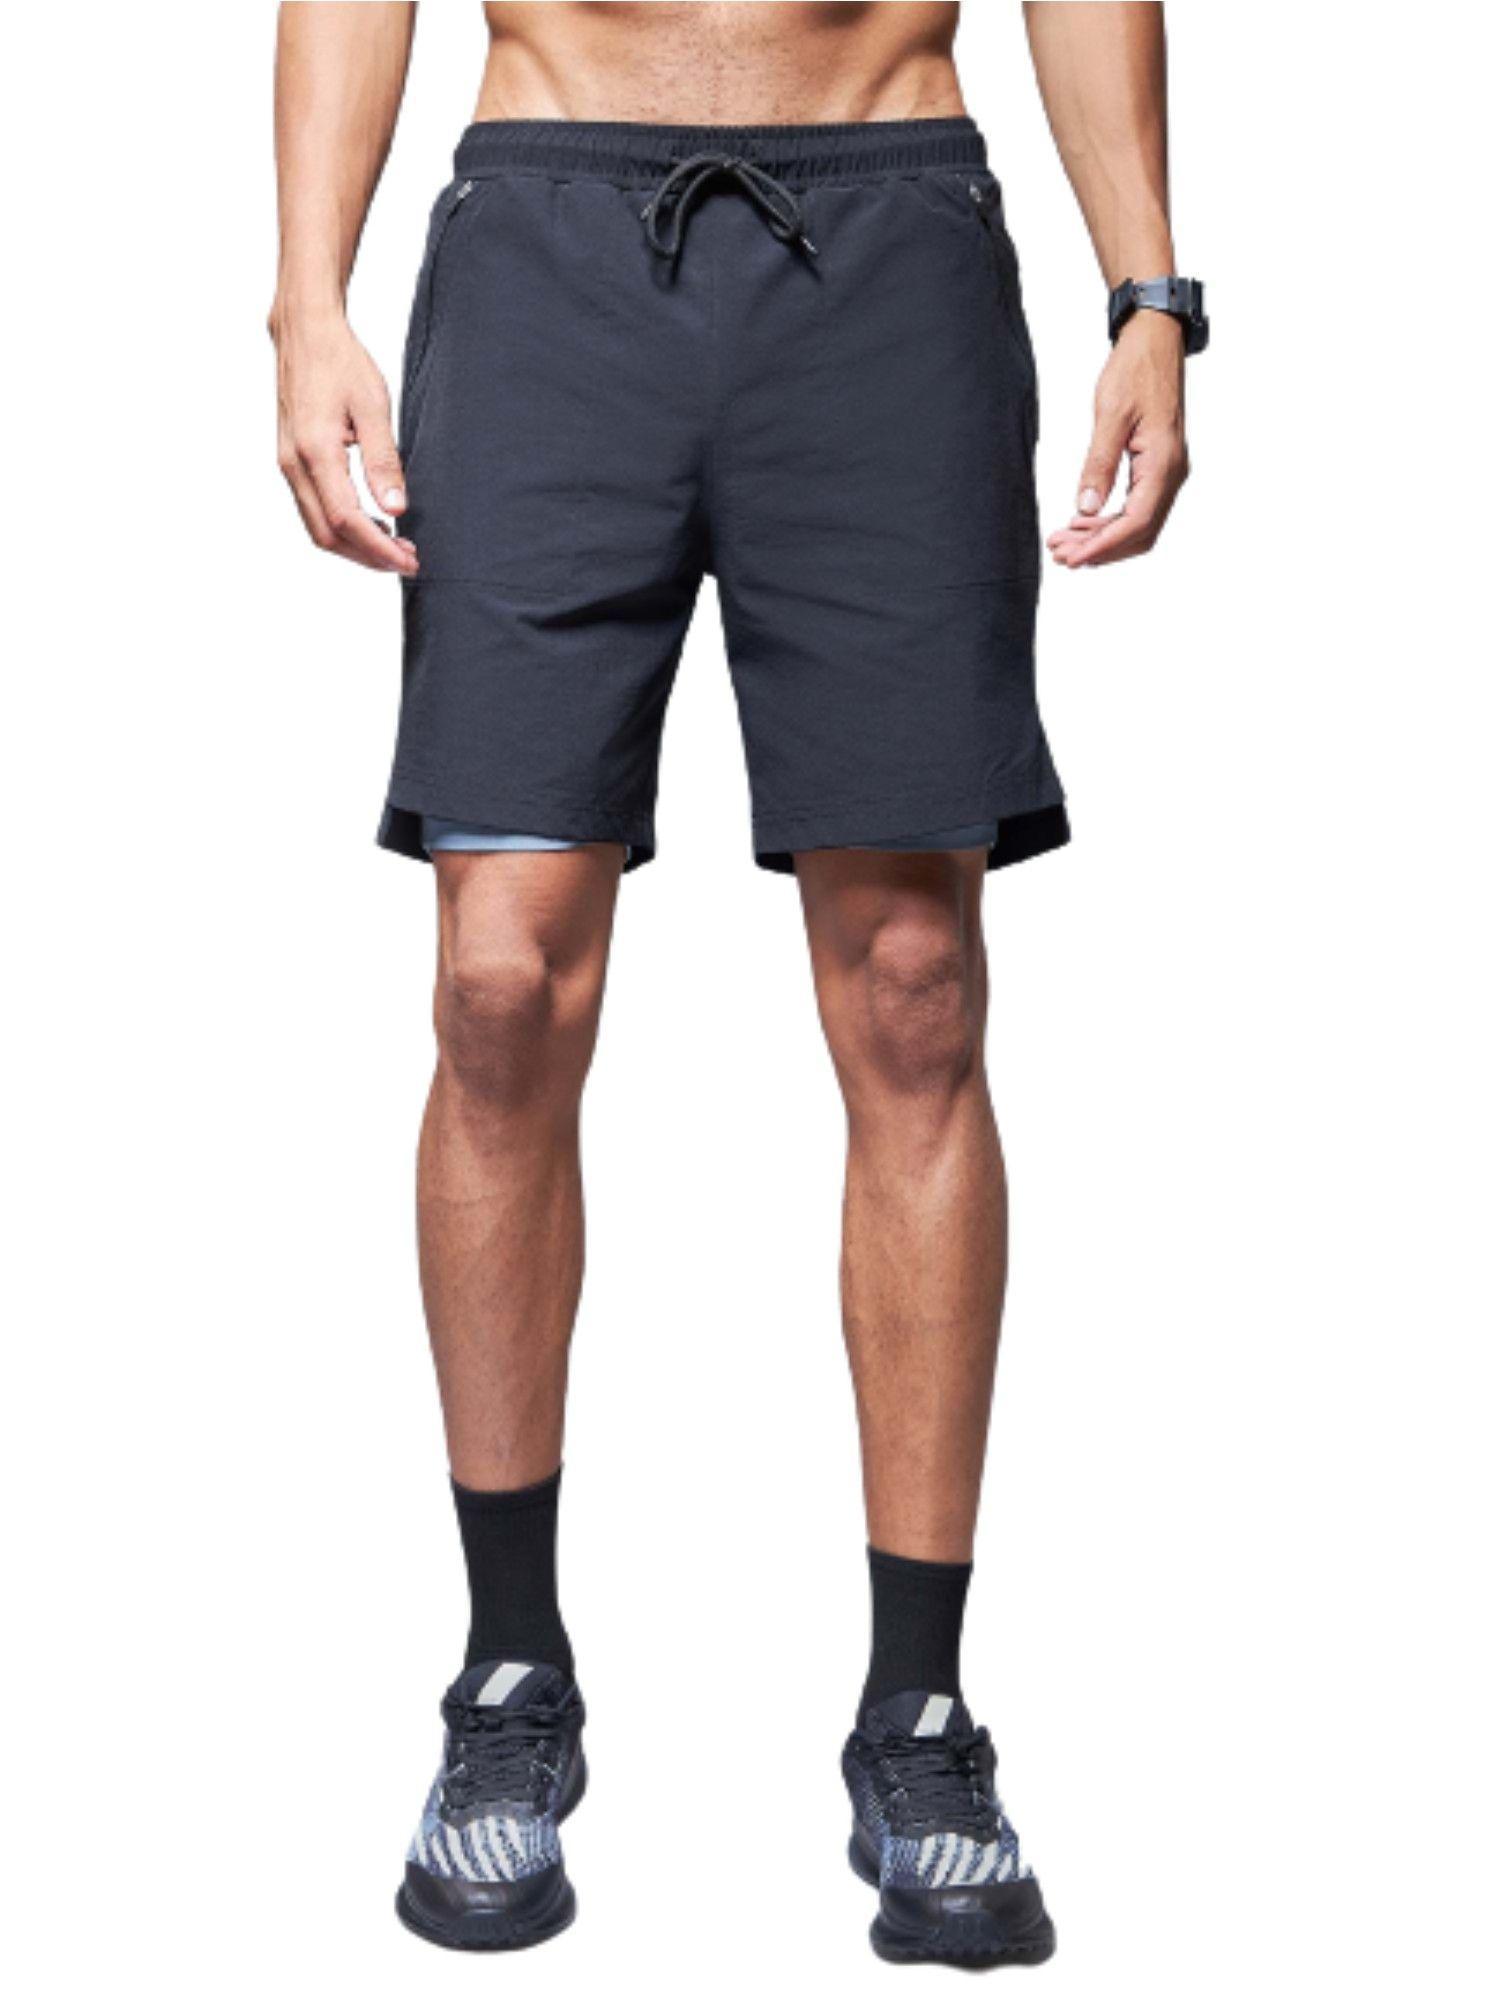 black-duoflex-shorts